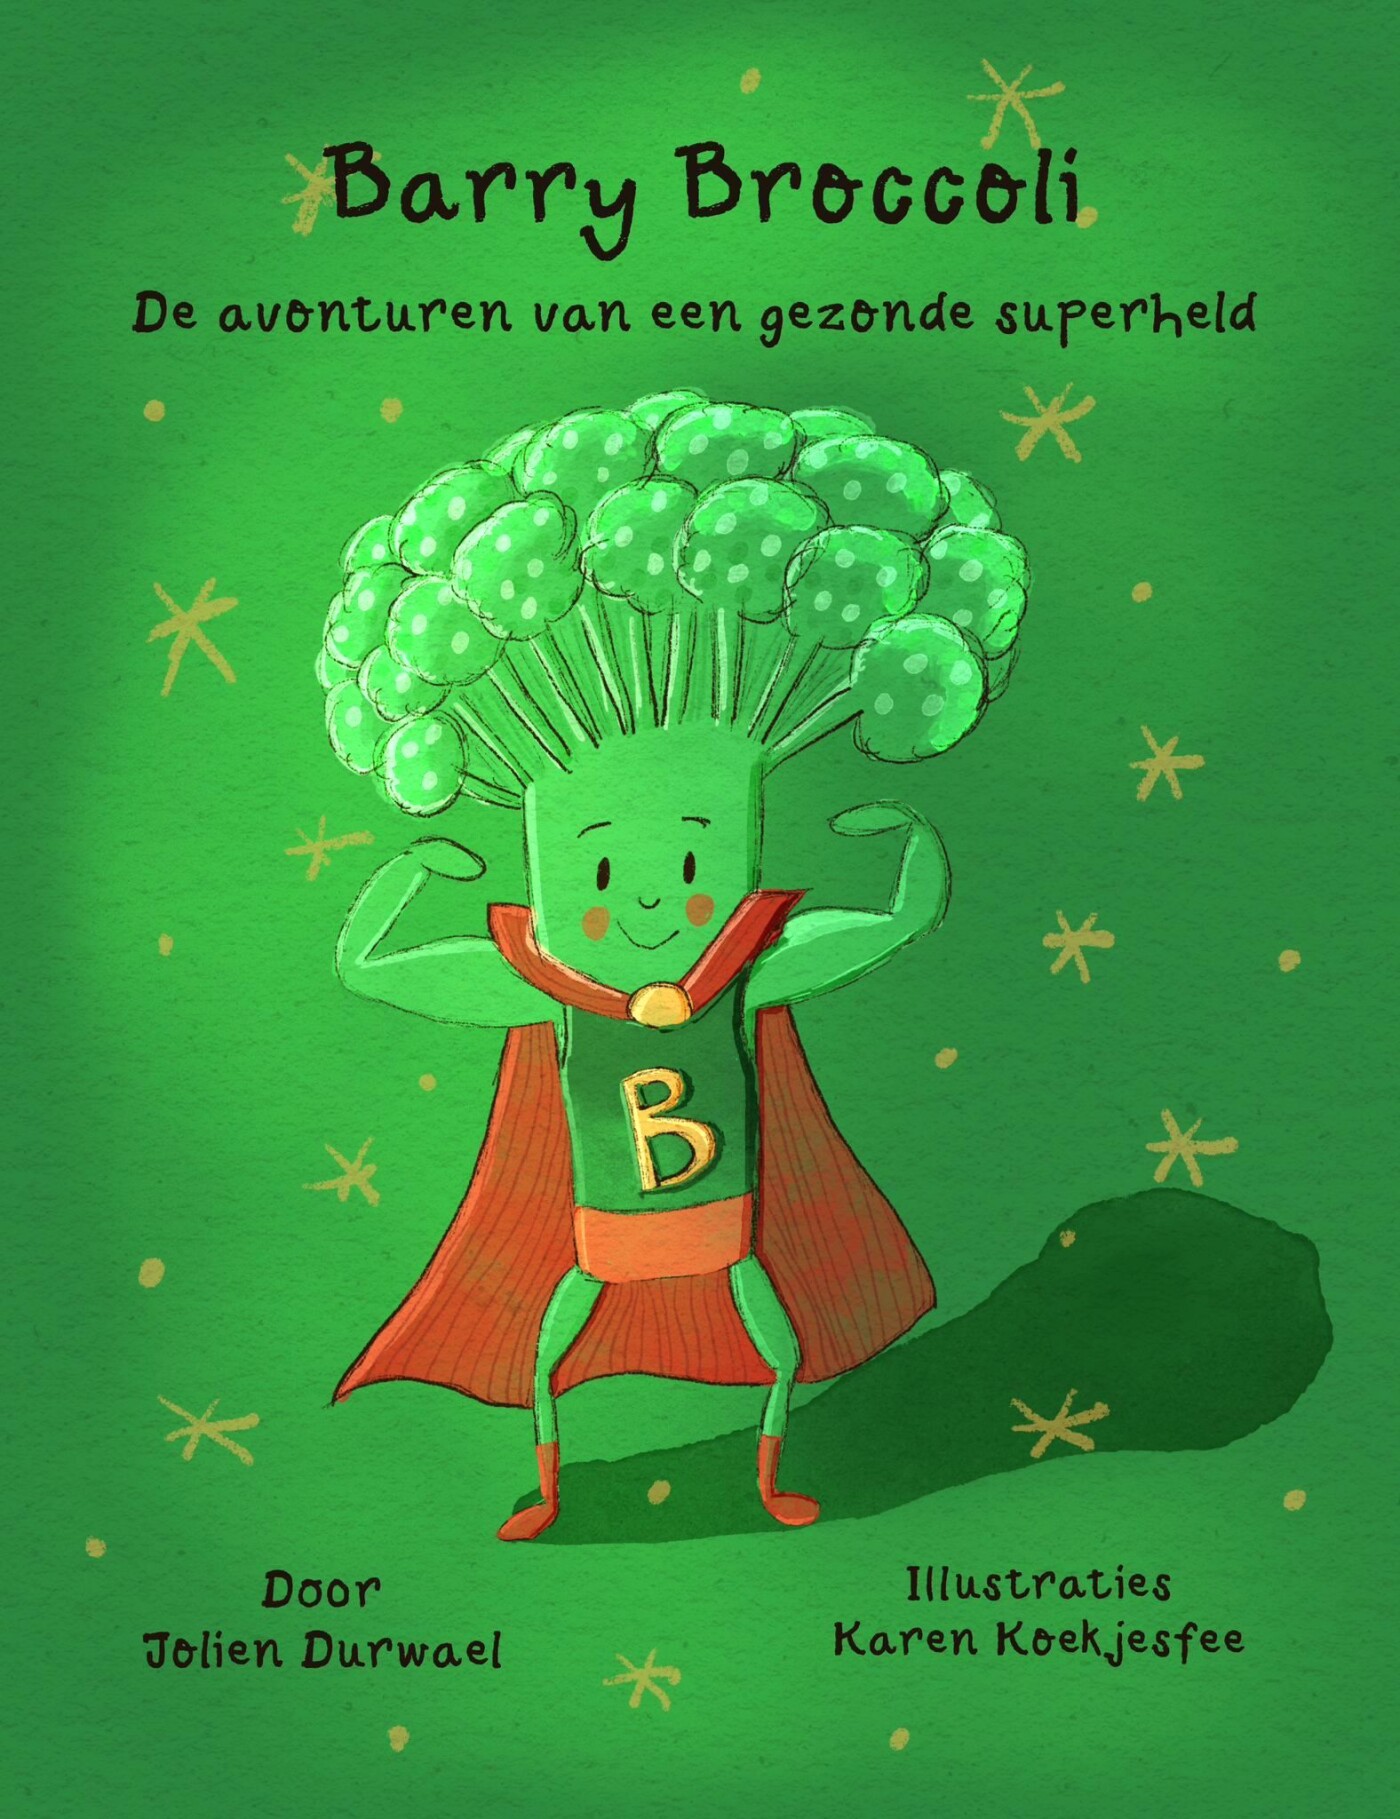 Barry Broccoli